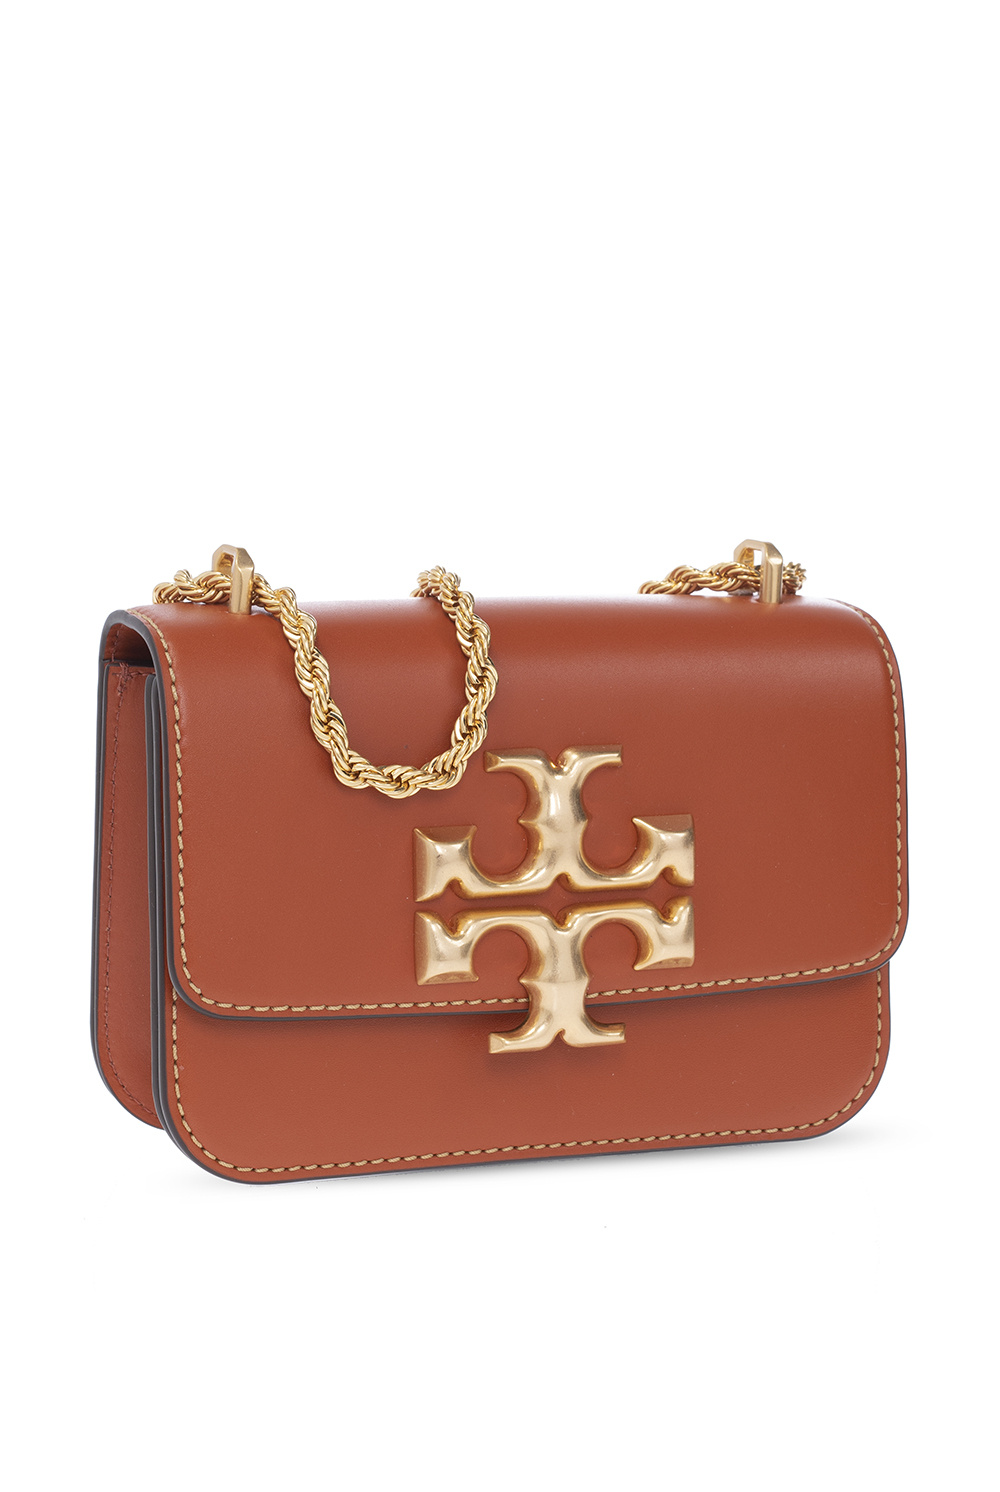 ‘Eleanor Small’ leather shoulder bag Tory Burch - Vitkac GB